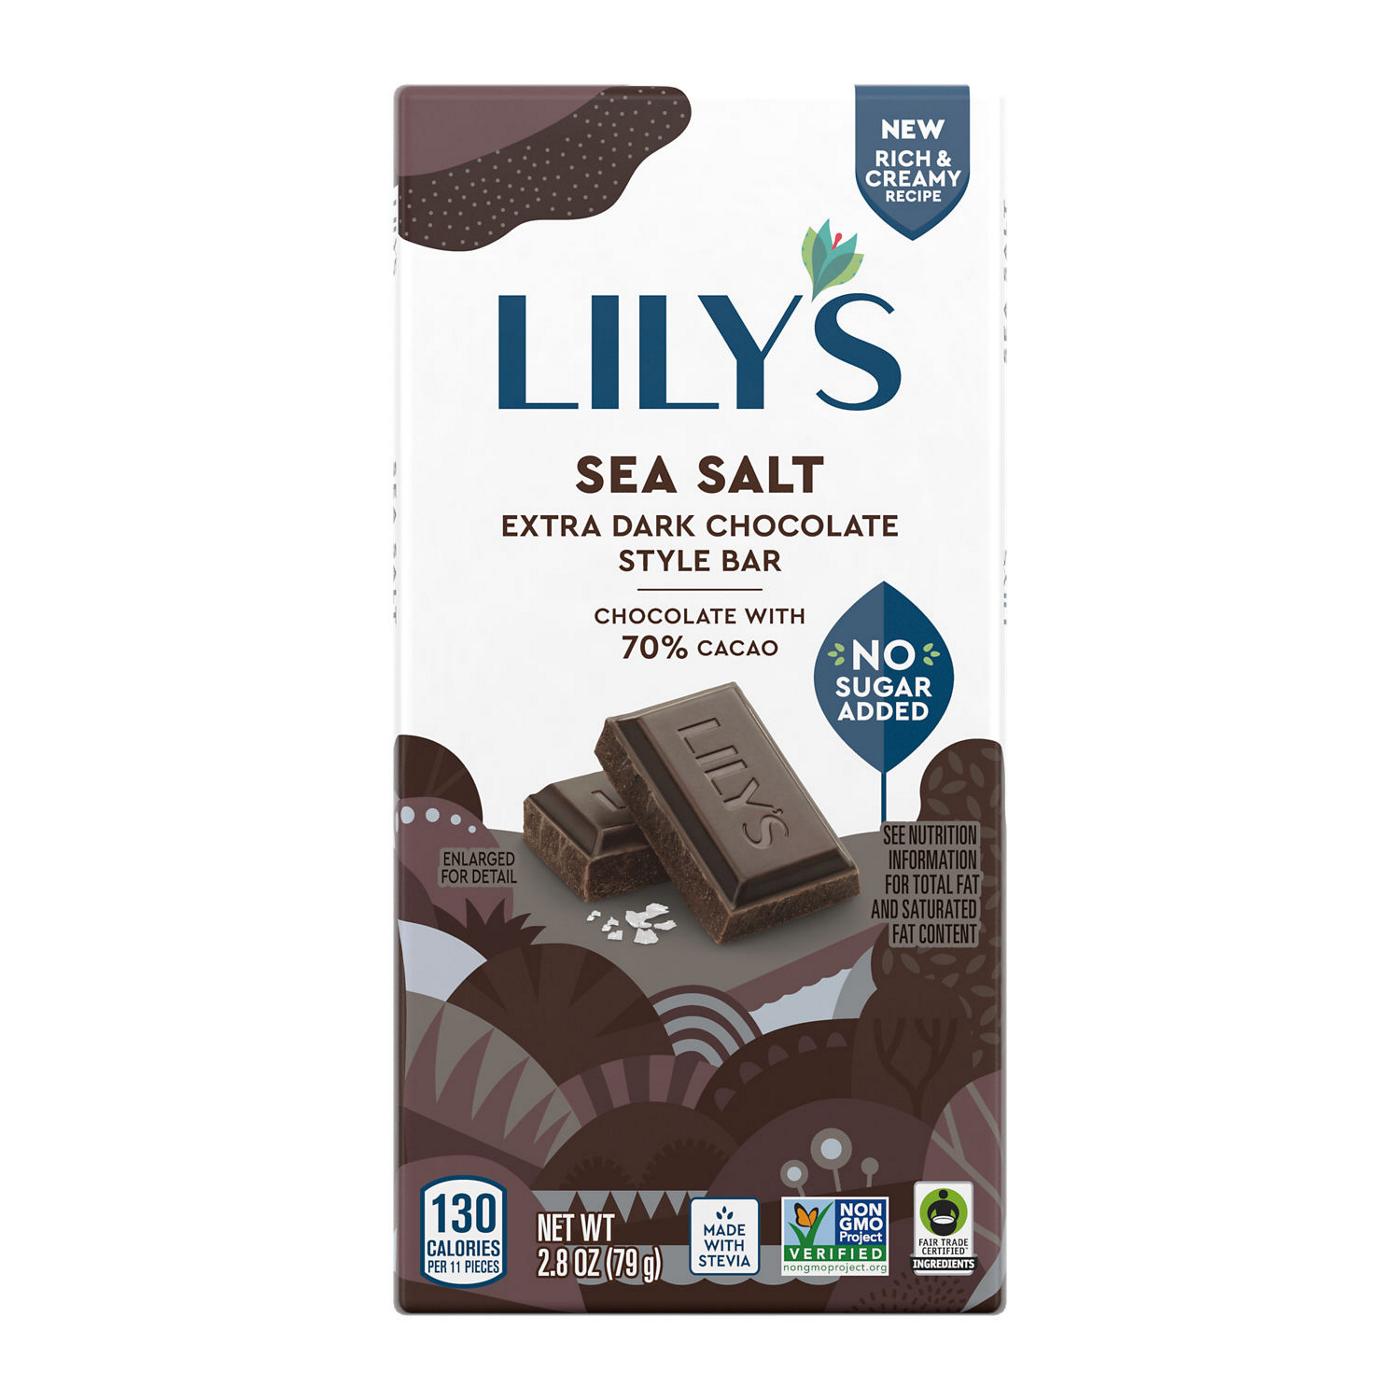 Lily's Sea Salt Extra Dark Chocolate Style Bar; image 1 of 4